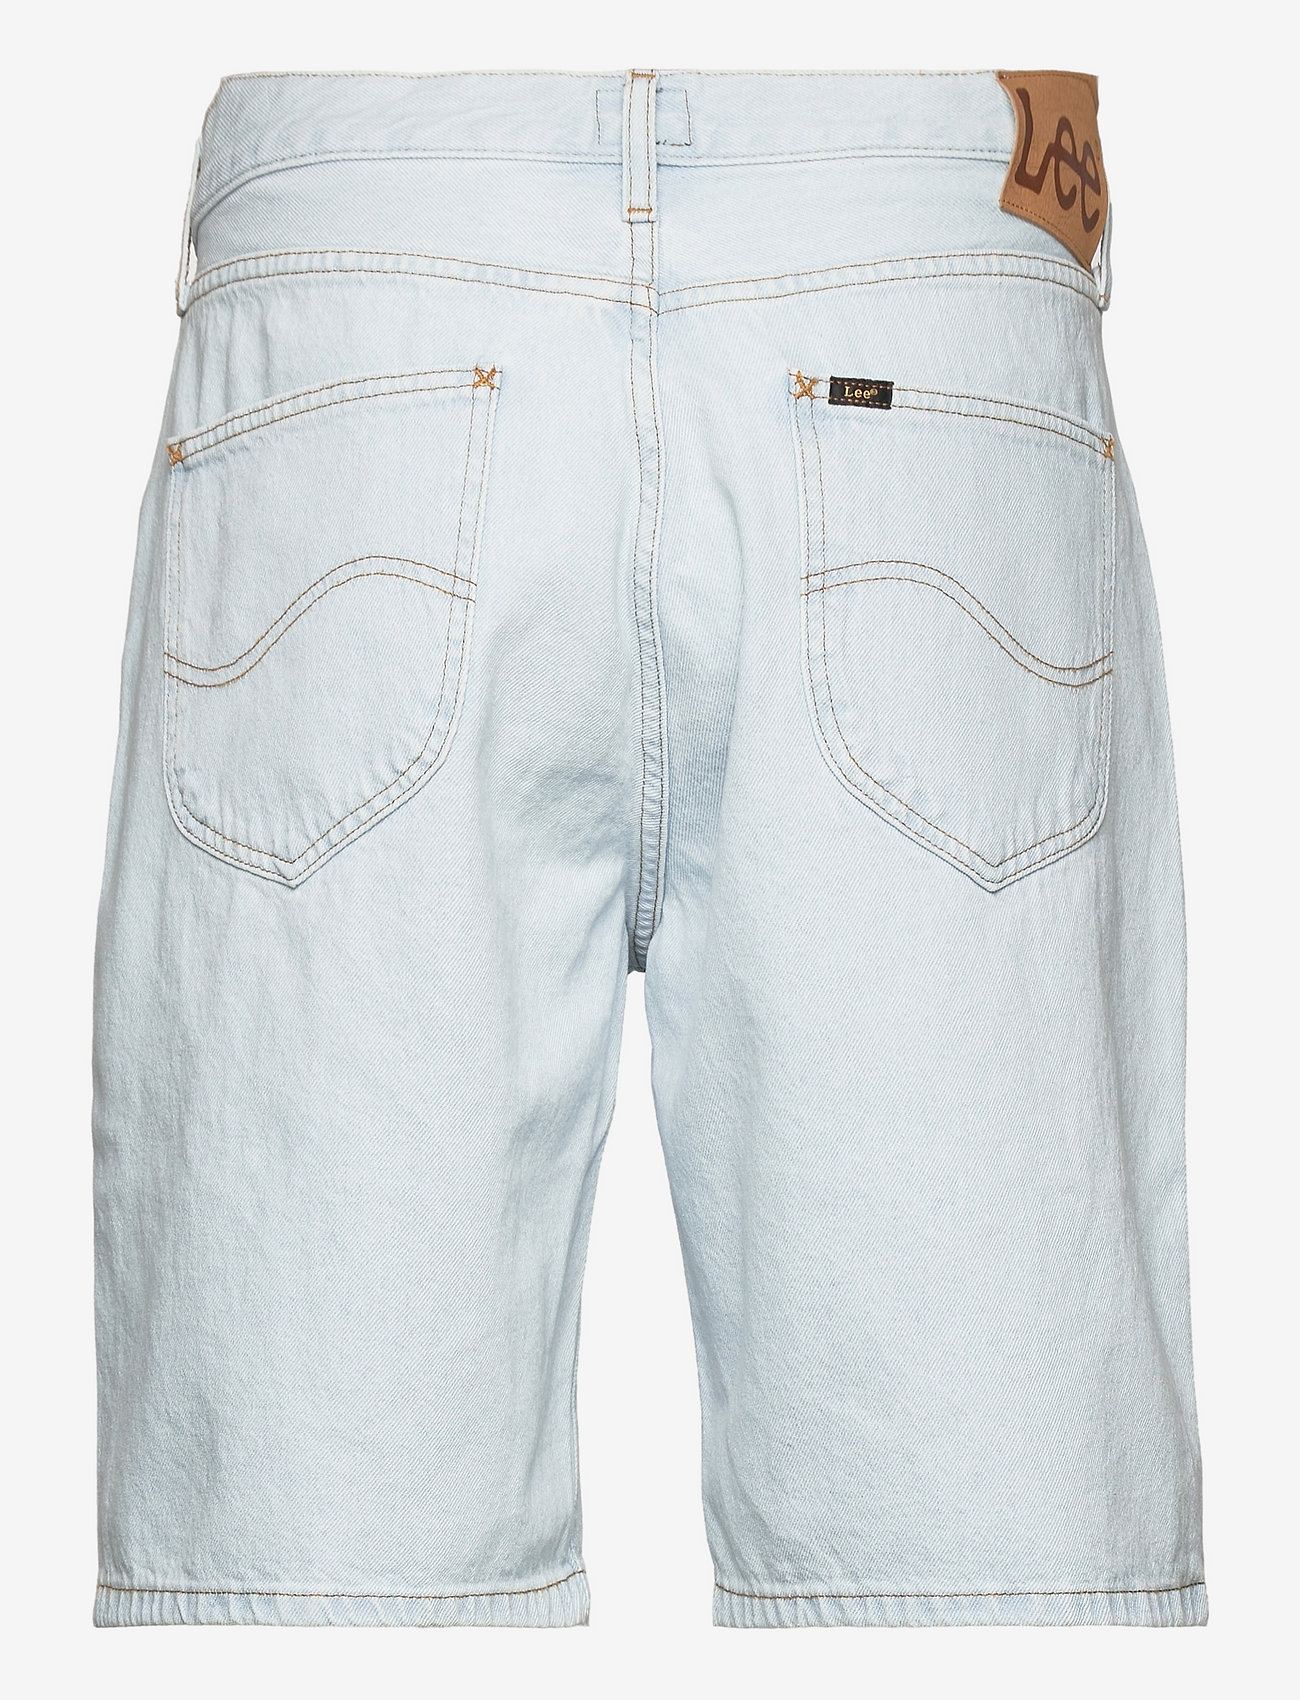 Lee Jeans - ASHER SHORT - jeansowe szorty - light fallon - 1